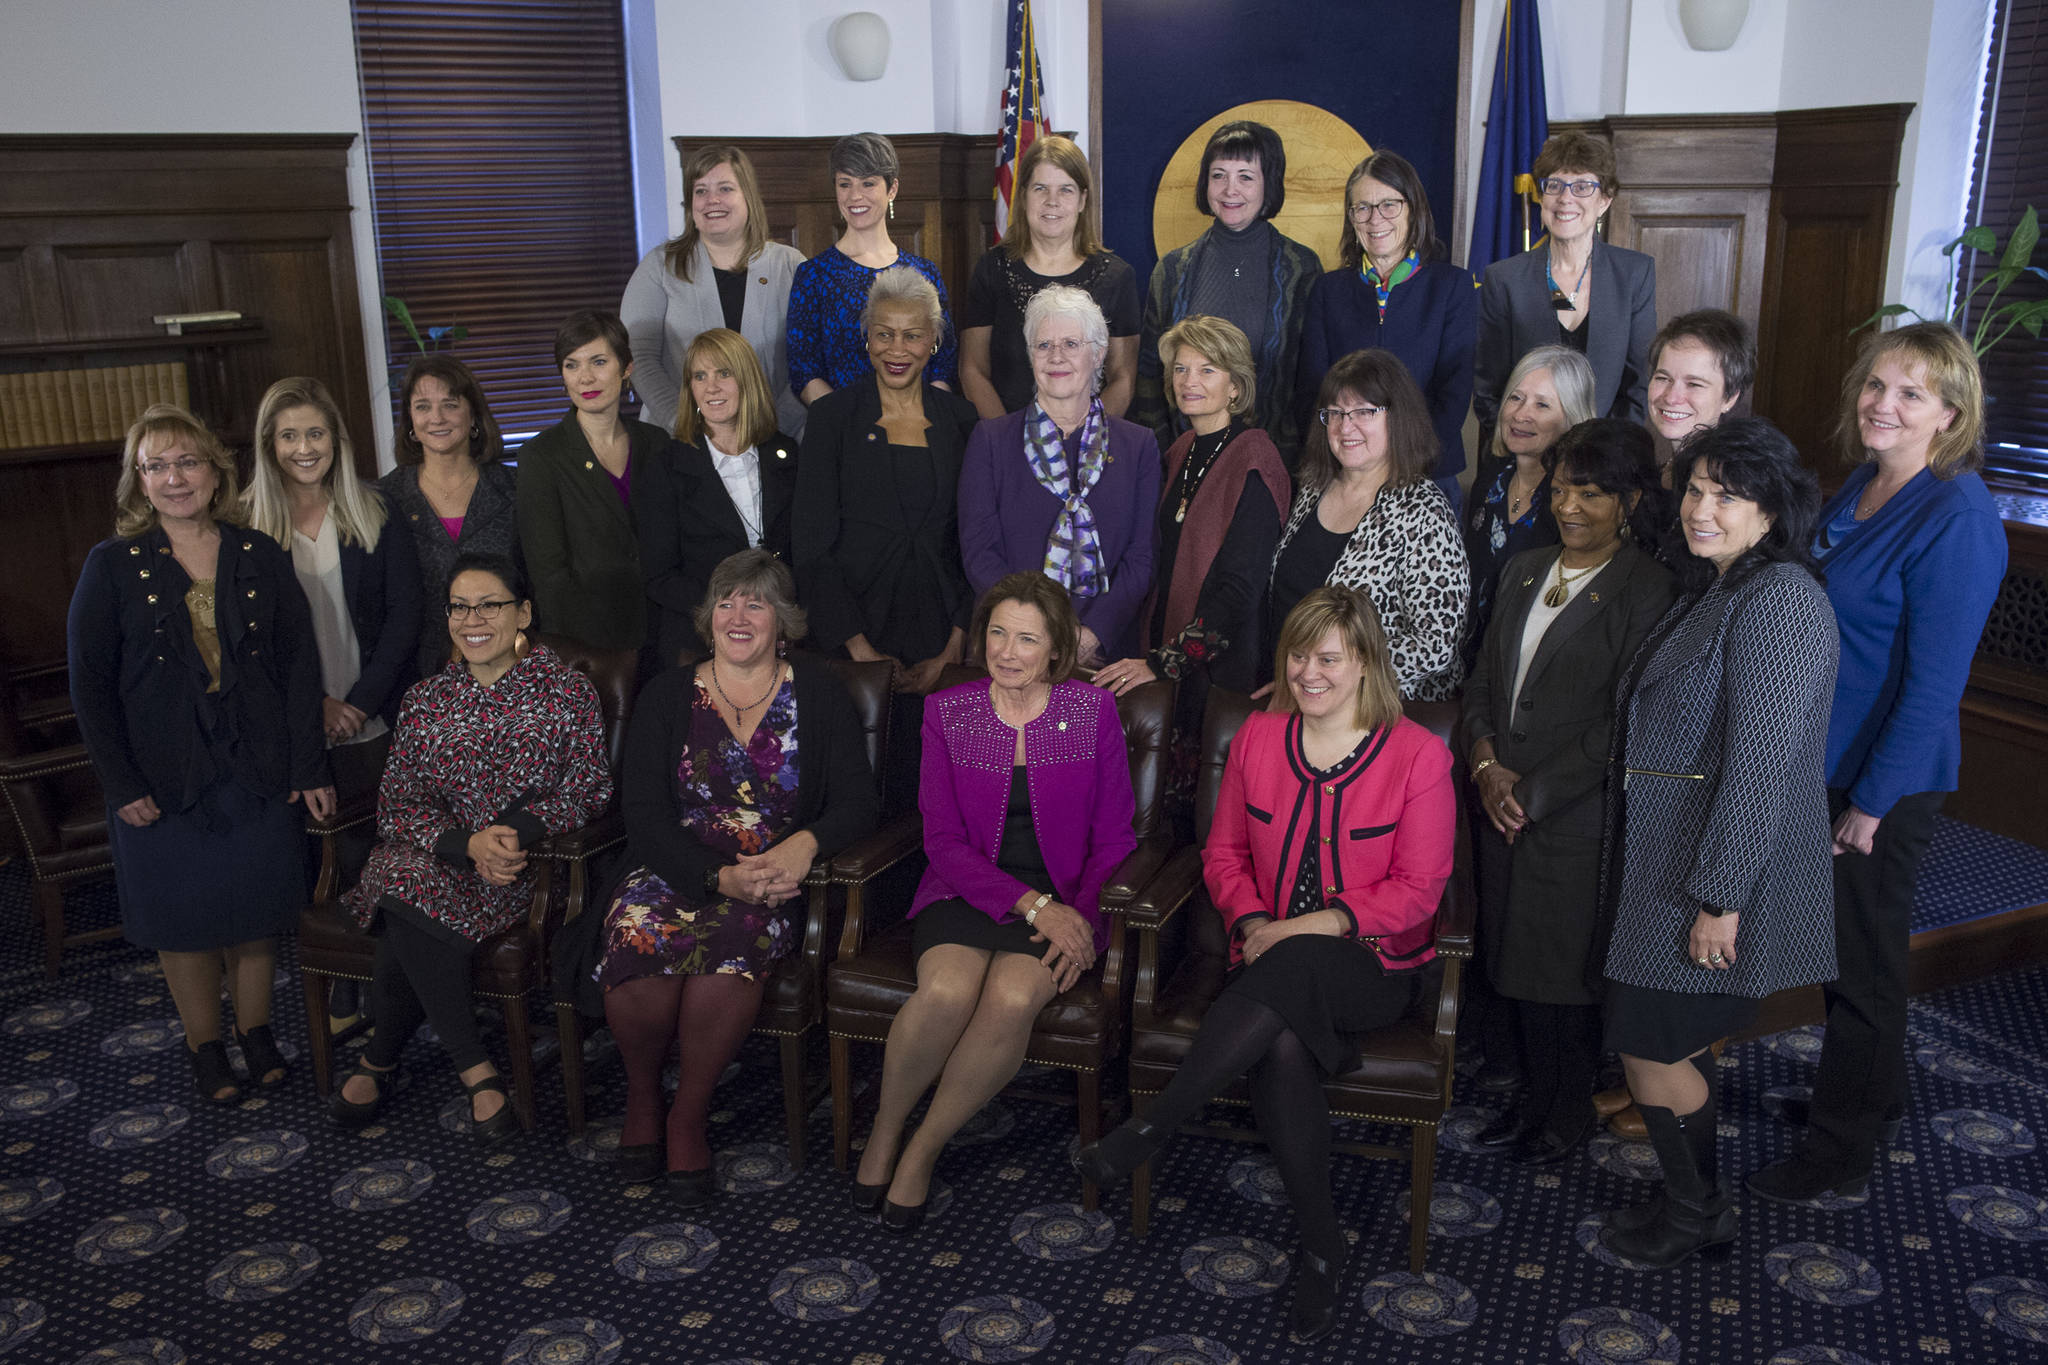 Twenty-three women legislators pose for a picture with U.S. Sen. Lisa Murkowski, R-Alaska, after Murkowski gave her annual speech to a Joint Session of the Alaska Legislature at the Capitol on Tuesday, Feb. 19, 2019. (Michael Penn | Juneau Empire)